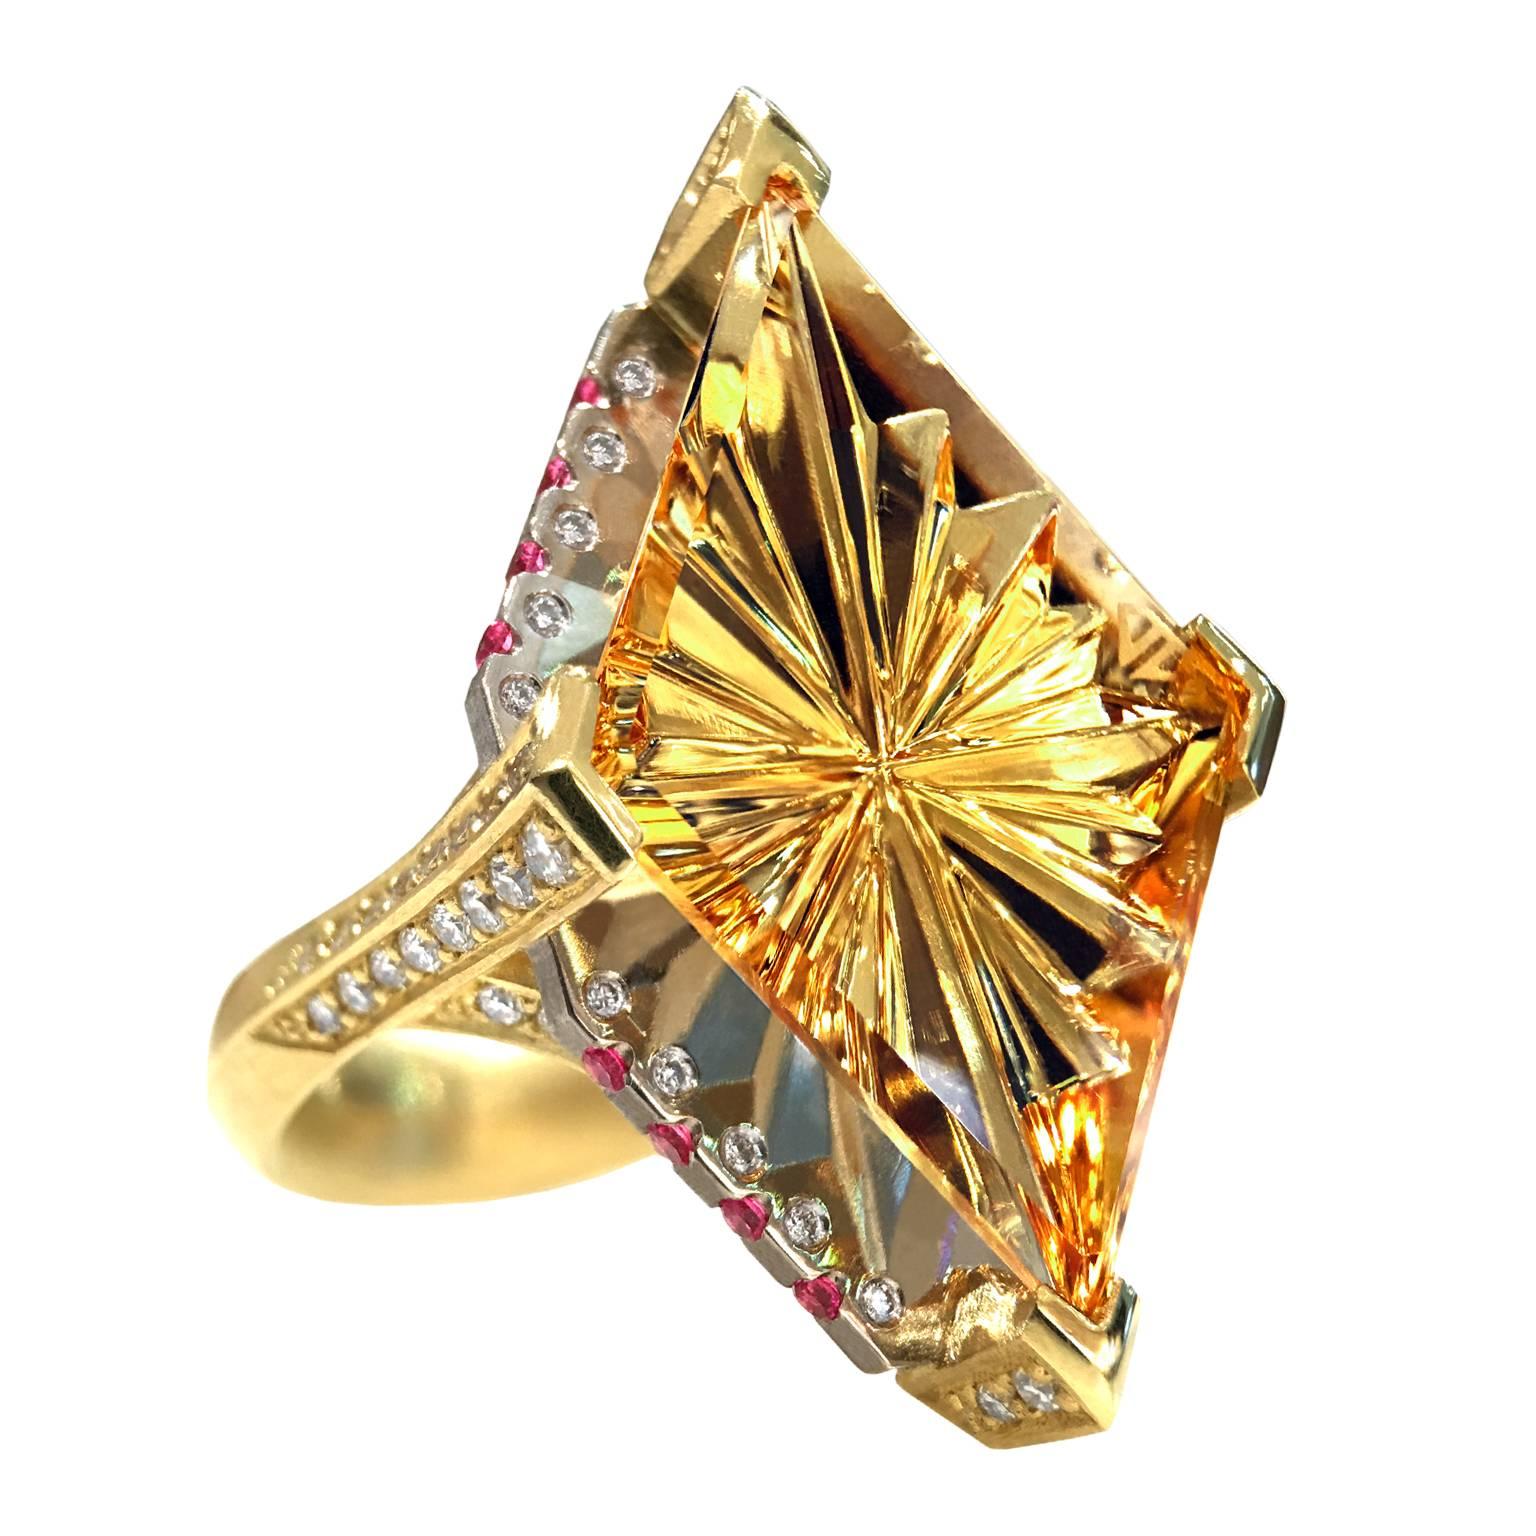  2016 Robin Waynee John Dyer Citrine Pink Sapphire Diamond Award Winning Ring